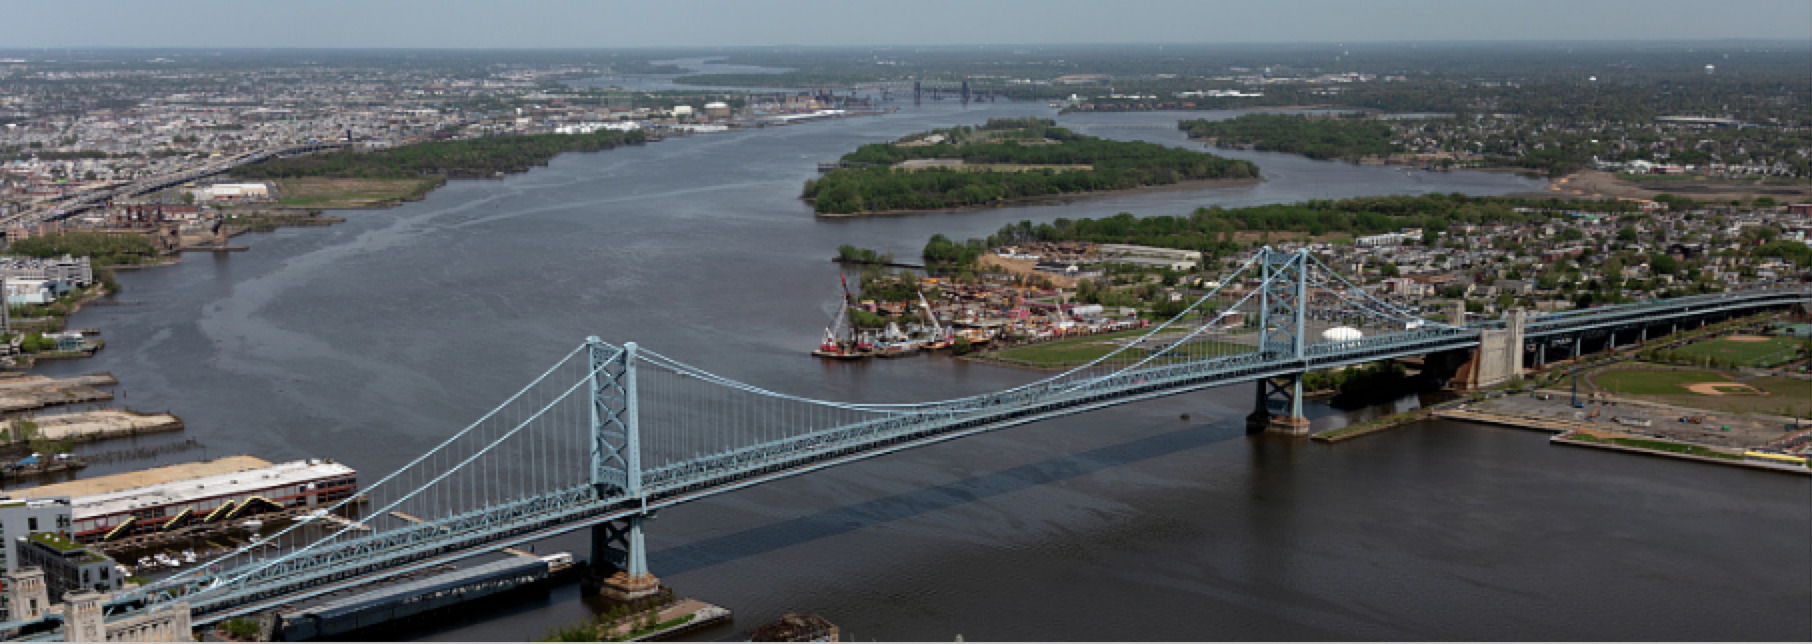 A color photograph of the Benjamin Franklin Bridge connecting Philadelphia to Camden over the Delaware River.